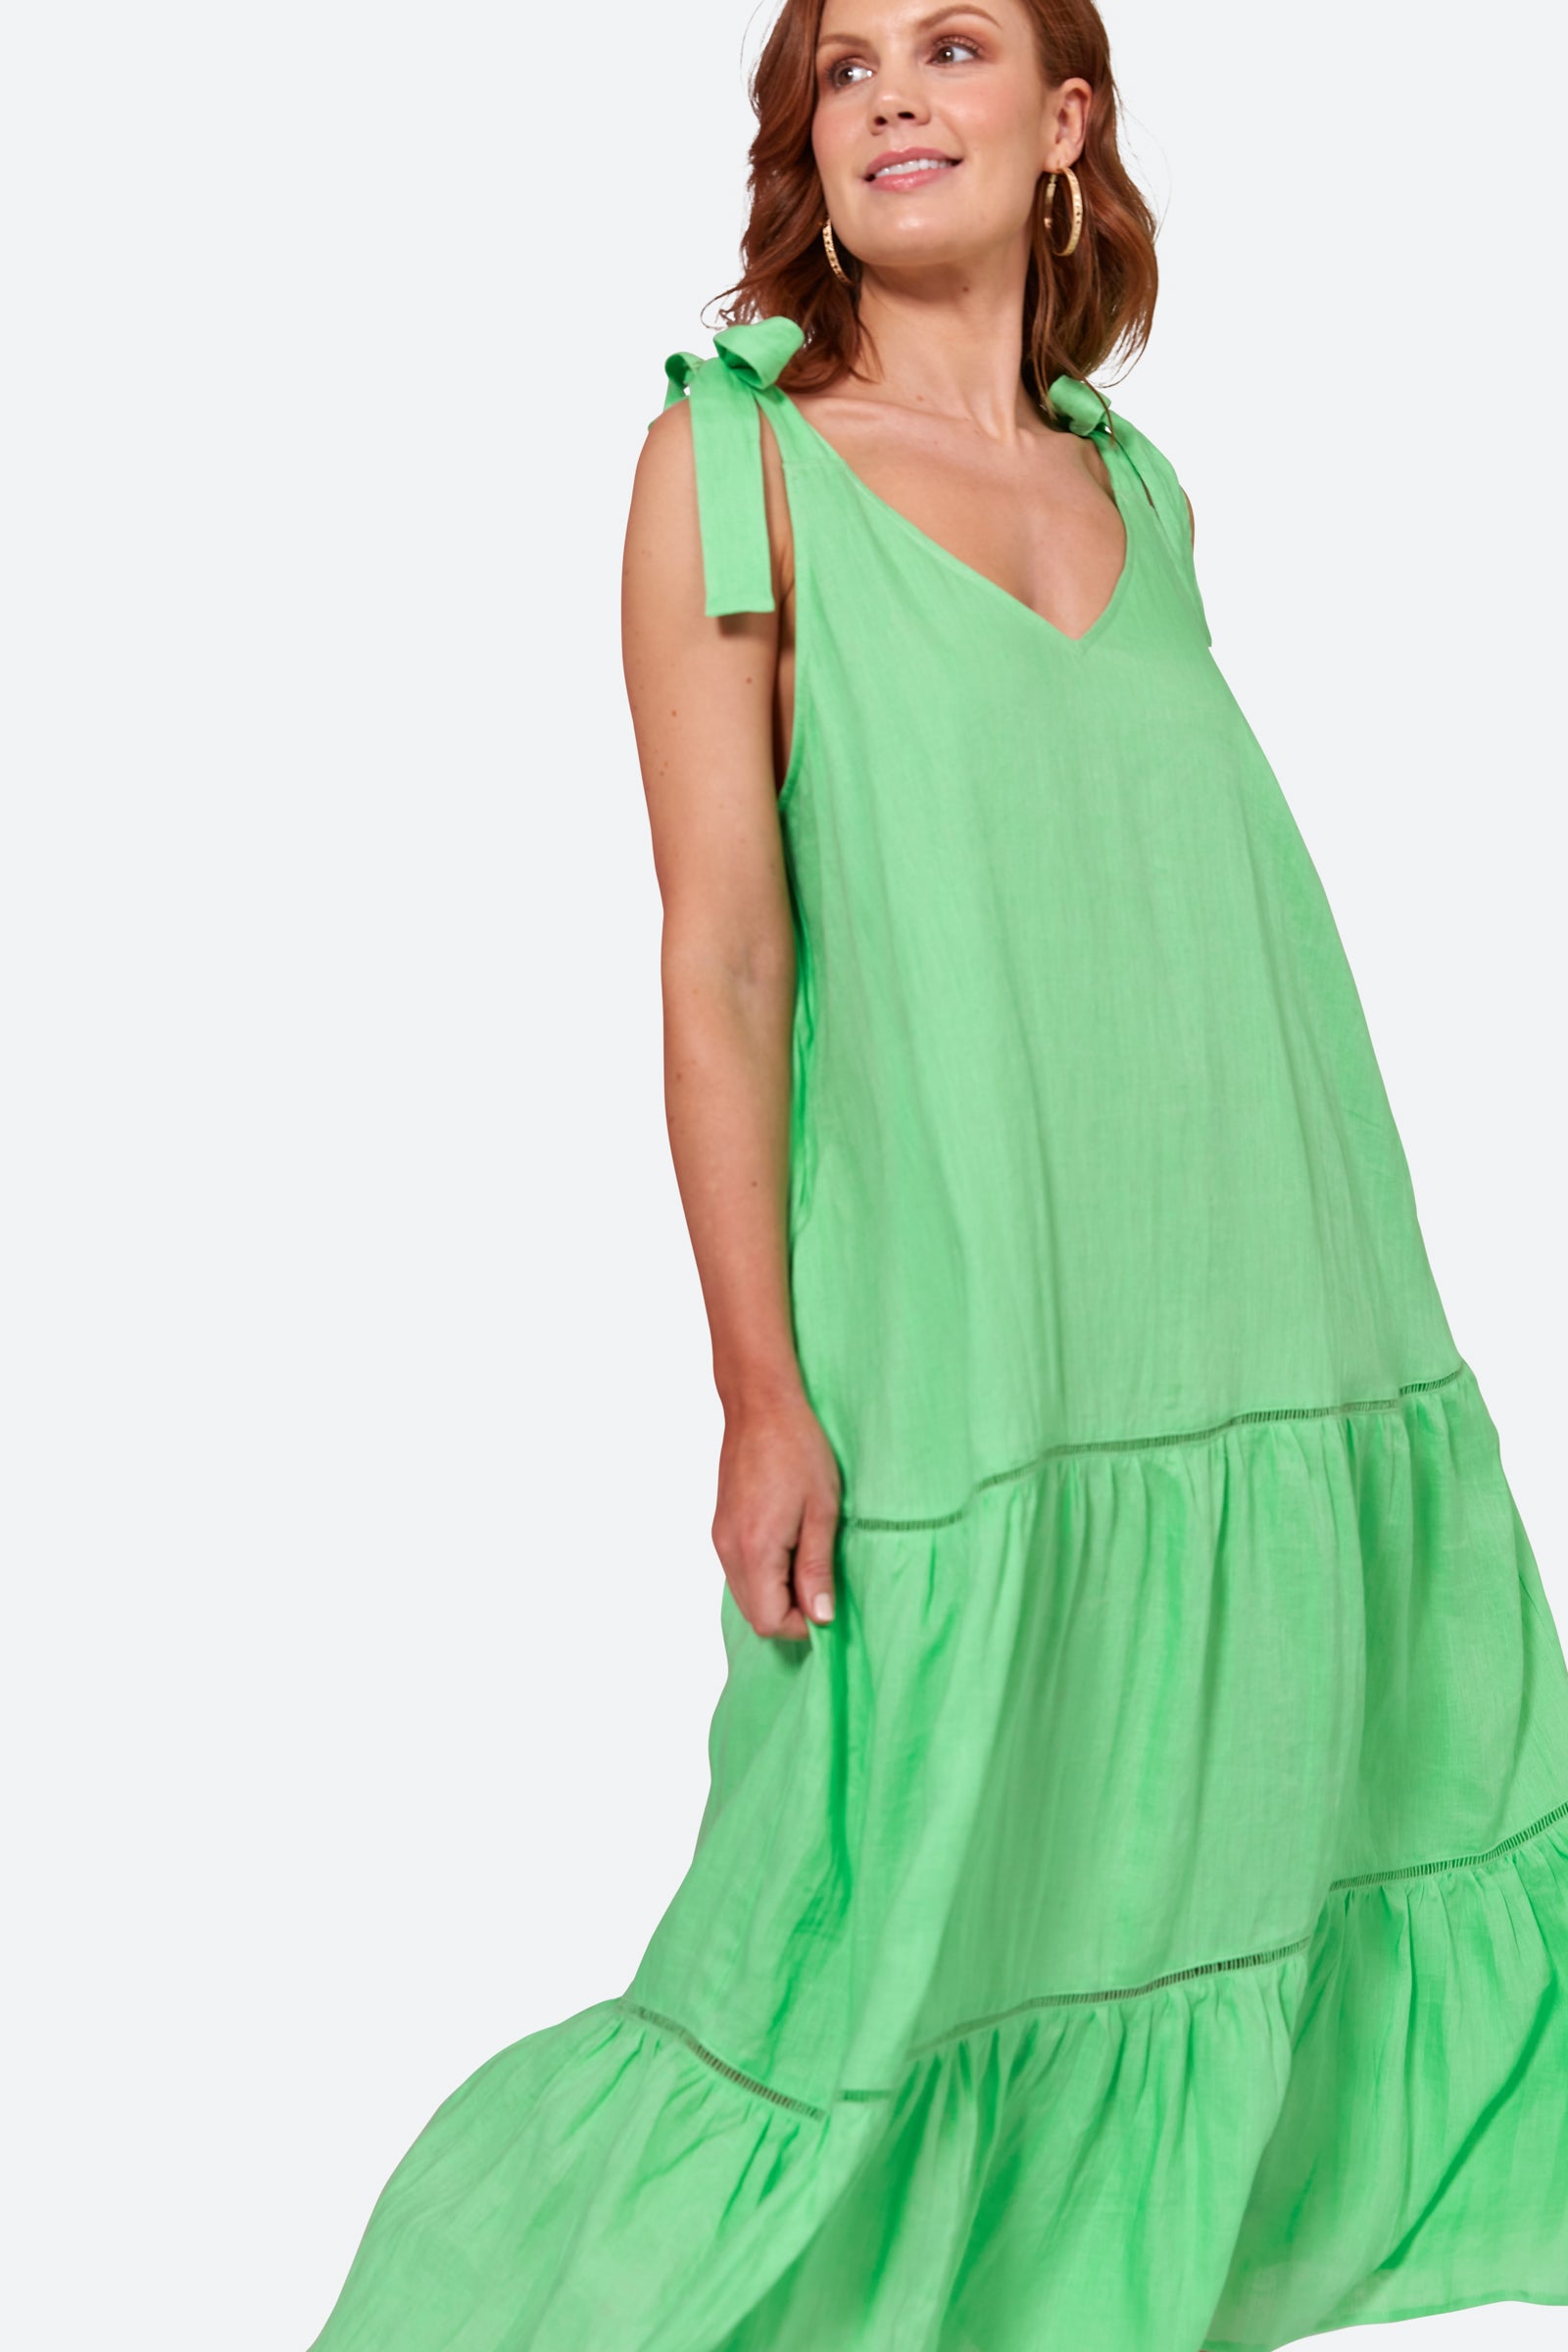 La Vie Tie Maxi - Kiwi - eb&ive Clothing - Dress Strappy Maxi Linen